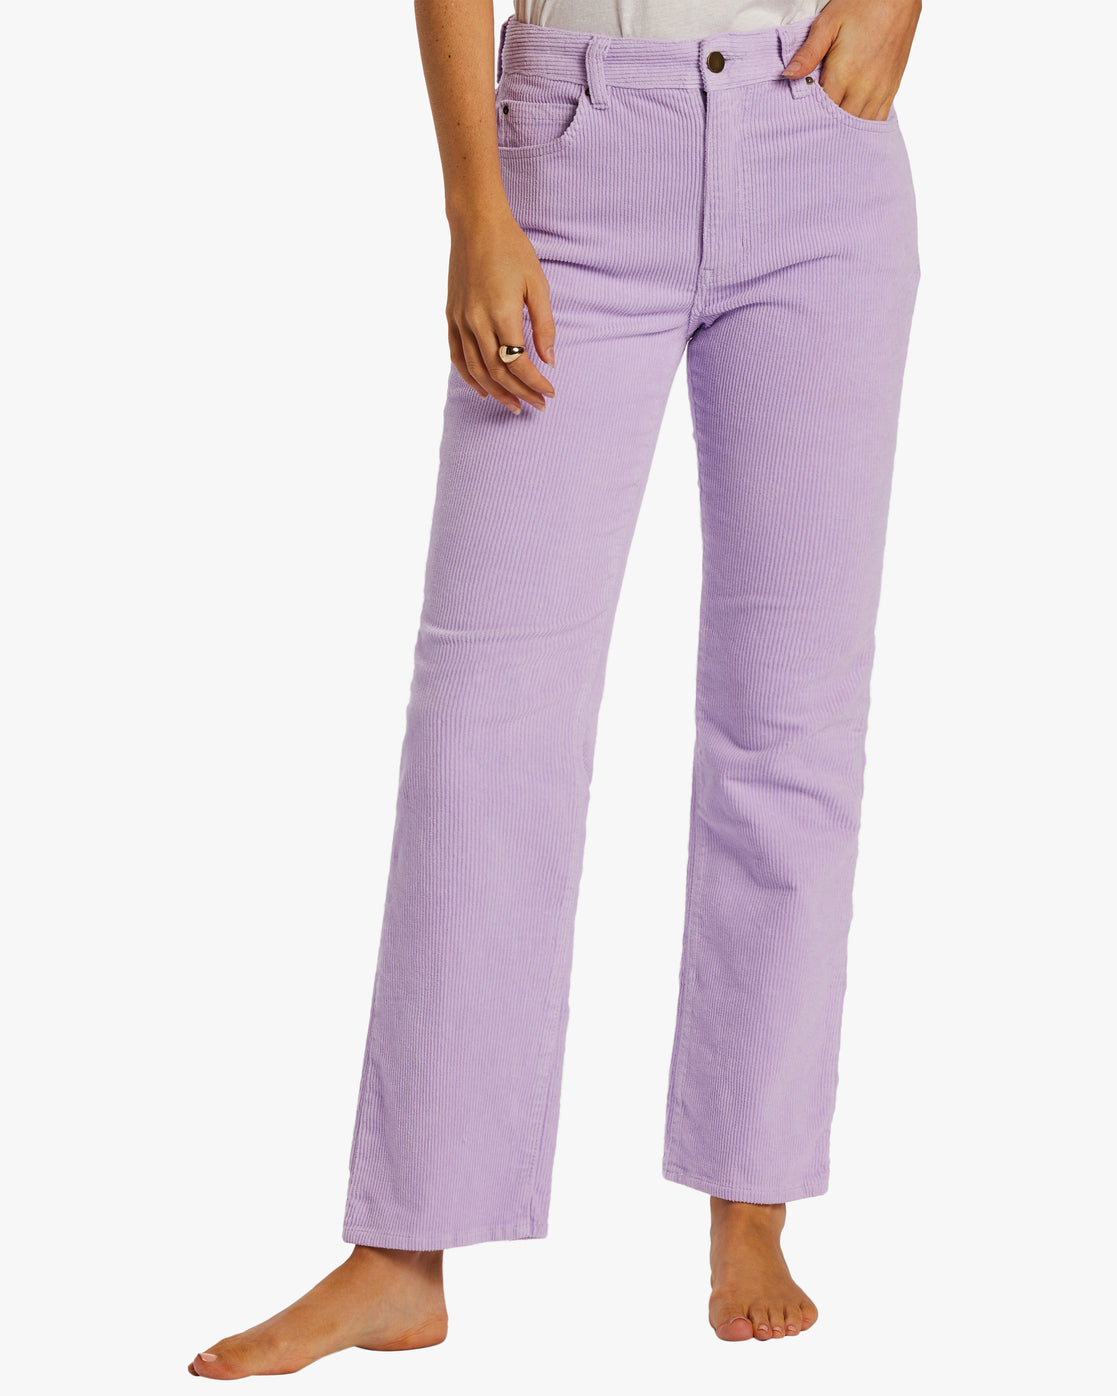 Women's JOSEPH Brand Pants Made In France Dark Purple Corduroy Size 36  Inseam 28 | eBay